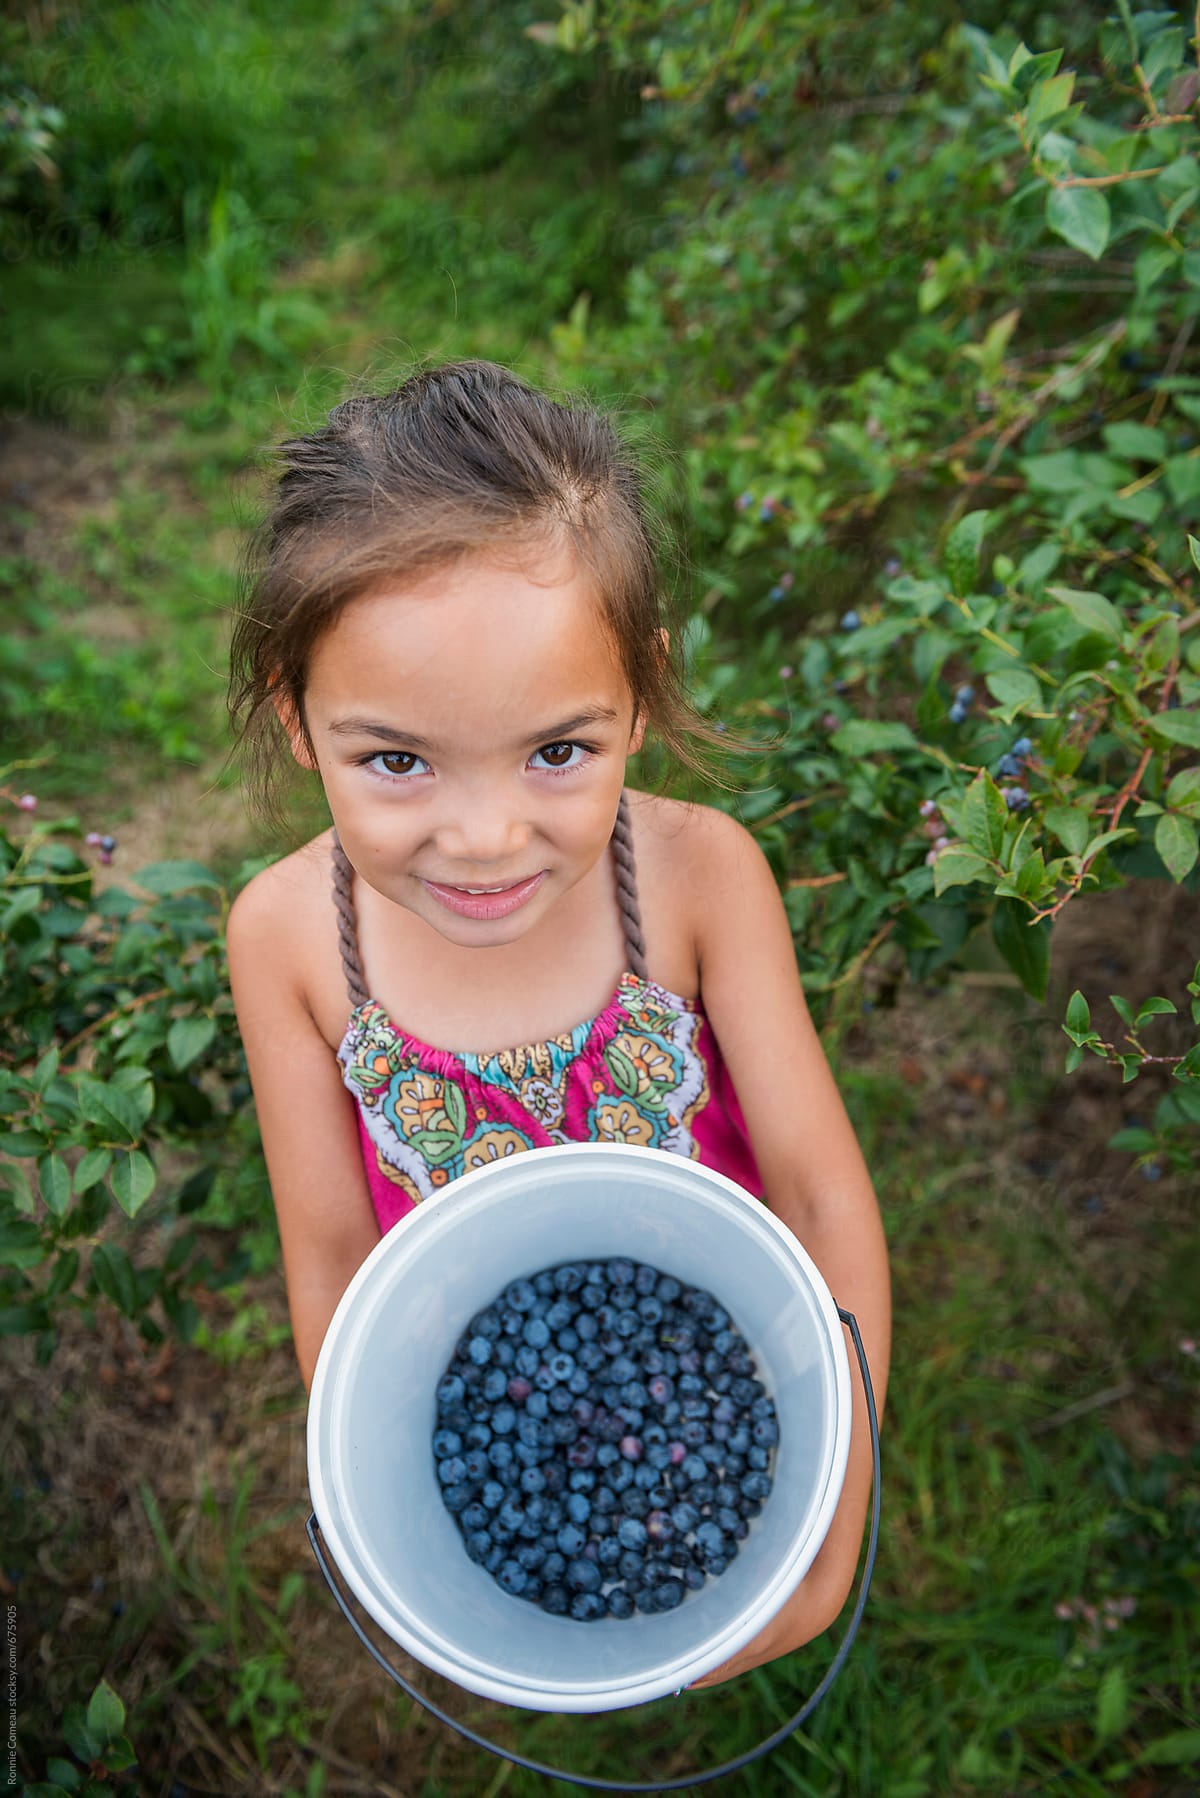 little-girl-holding-blueberry-bucket-del-colaborador-de-stocksy